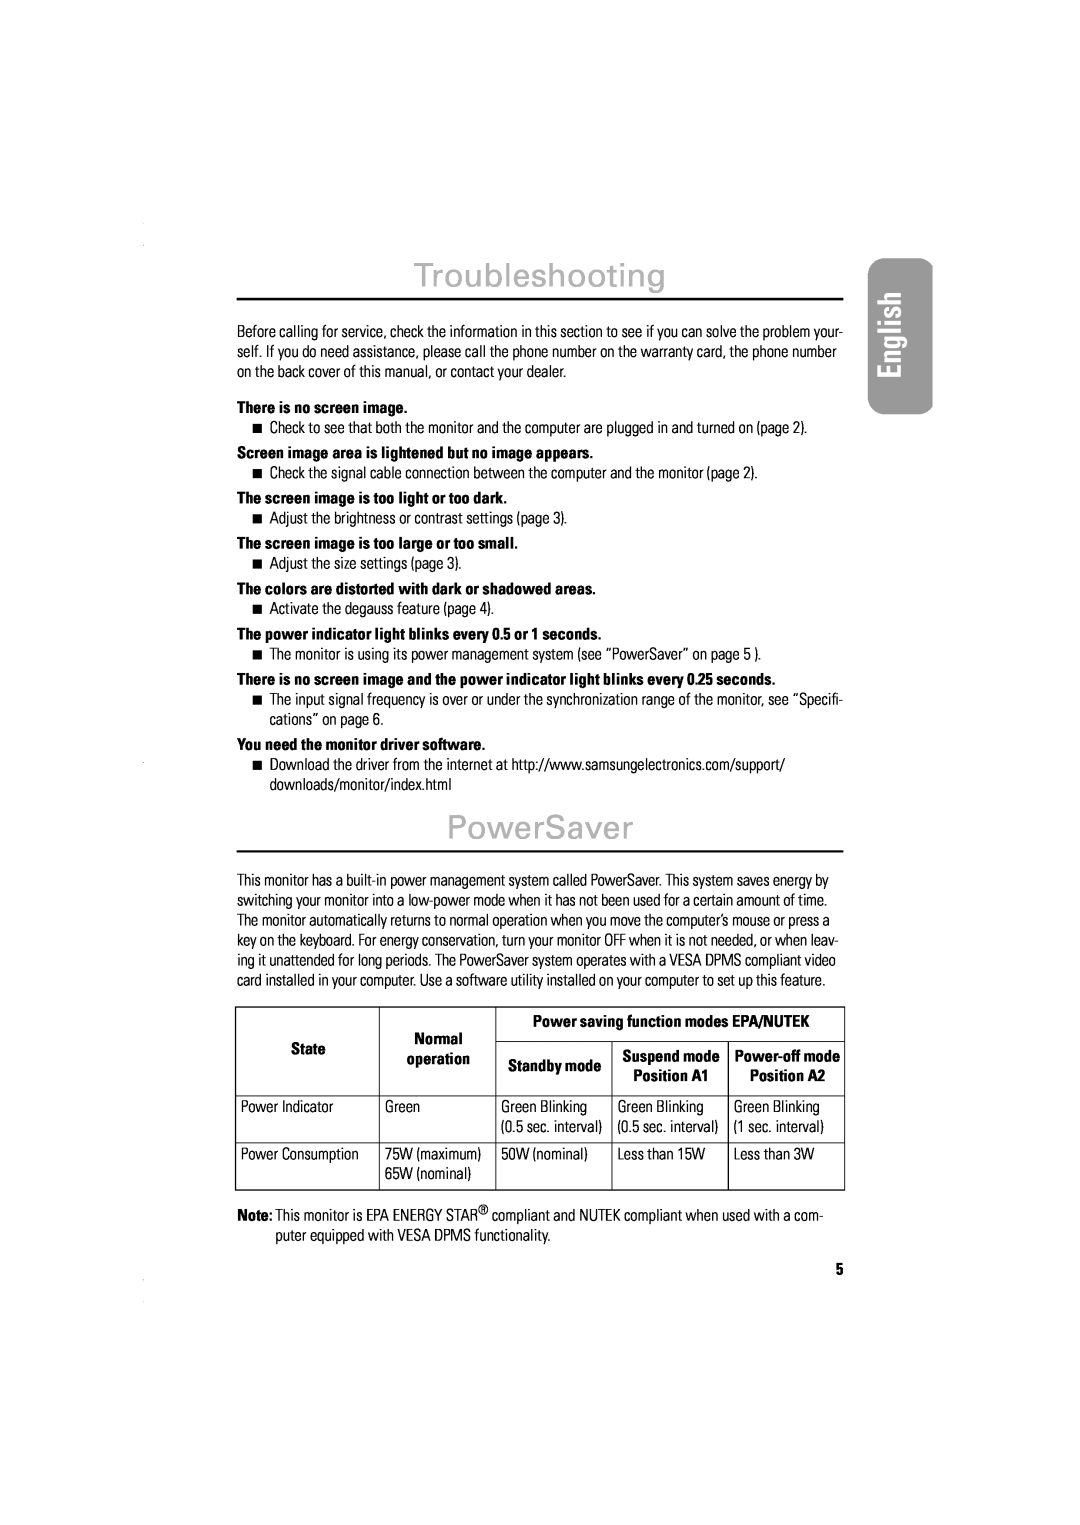 Samsung 550v manual Troubleshooting, PowerSaver, Italiano Portuguese Deutsch Español Français English 